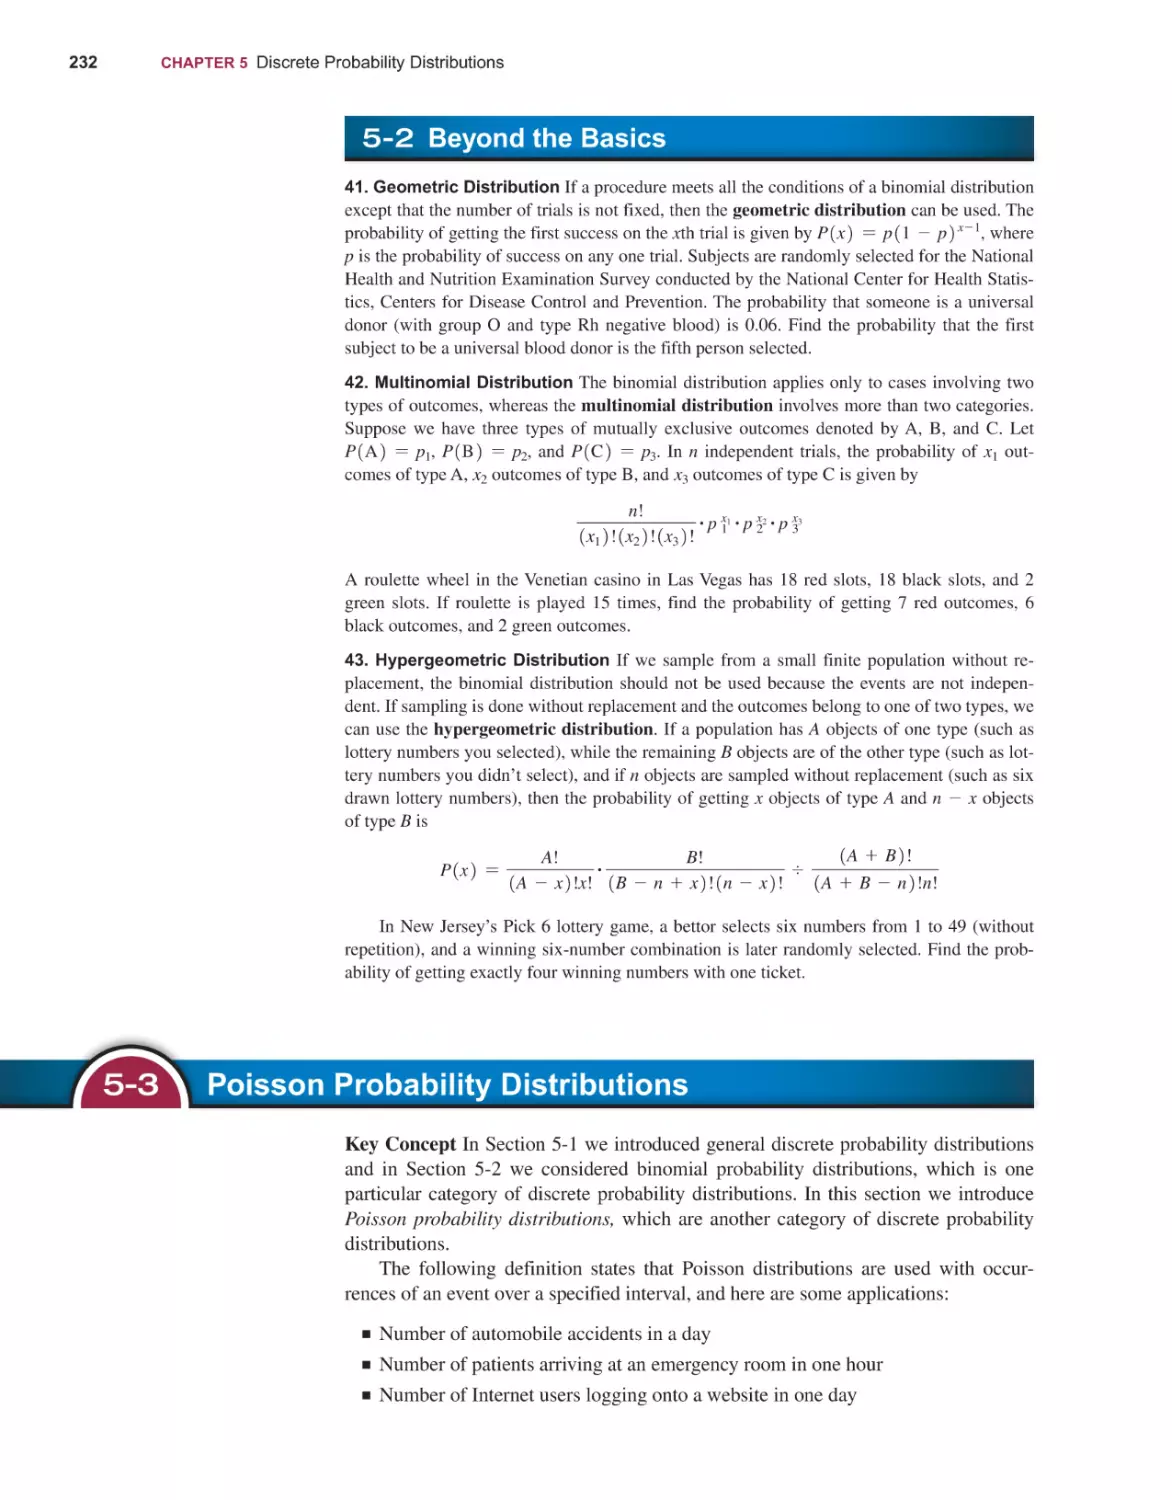 5‐3 Poisson Probability Distributions